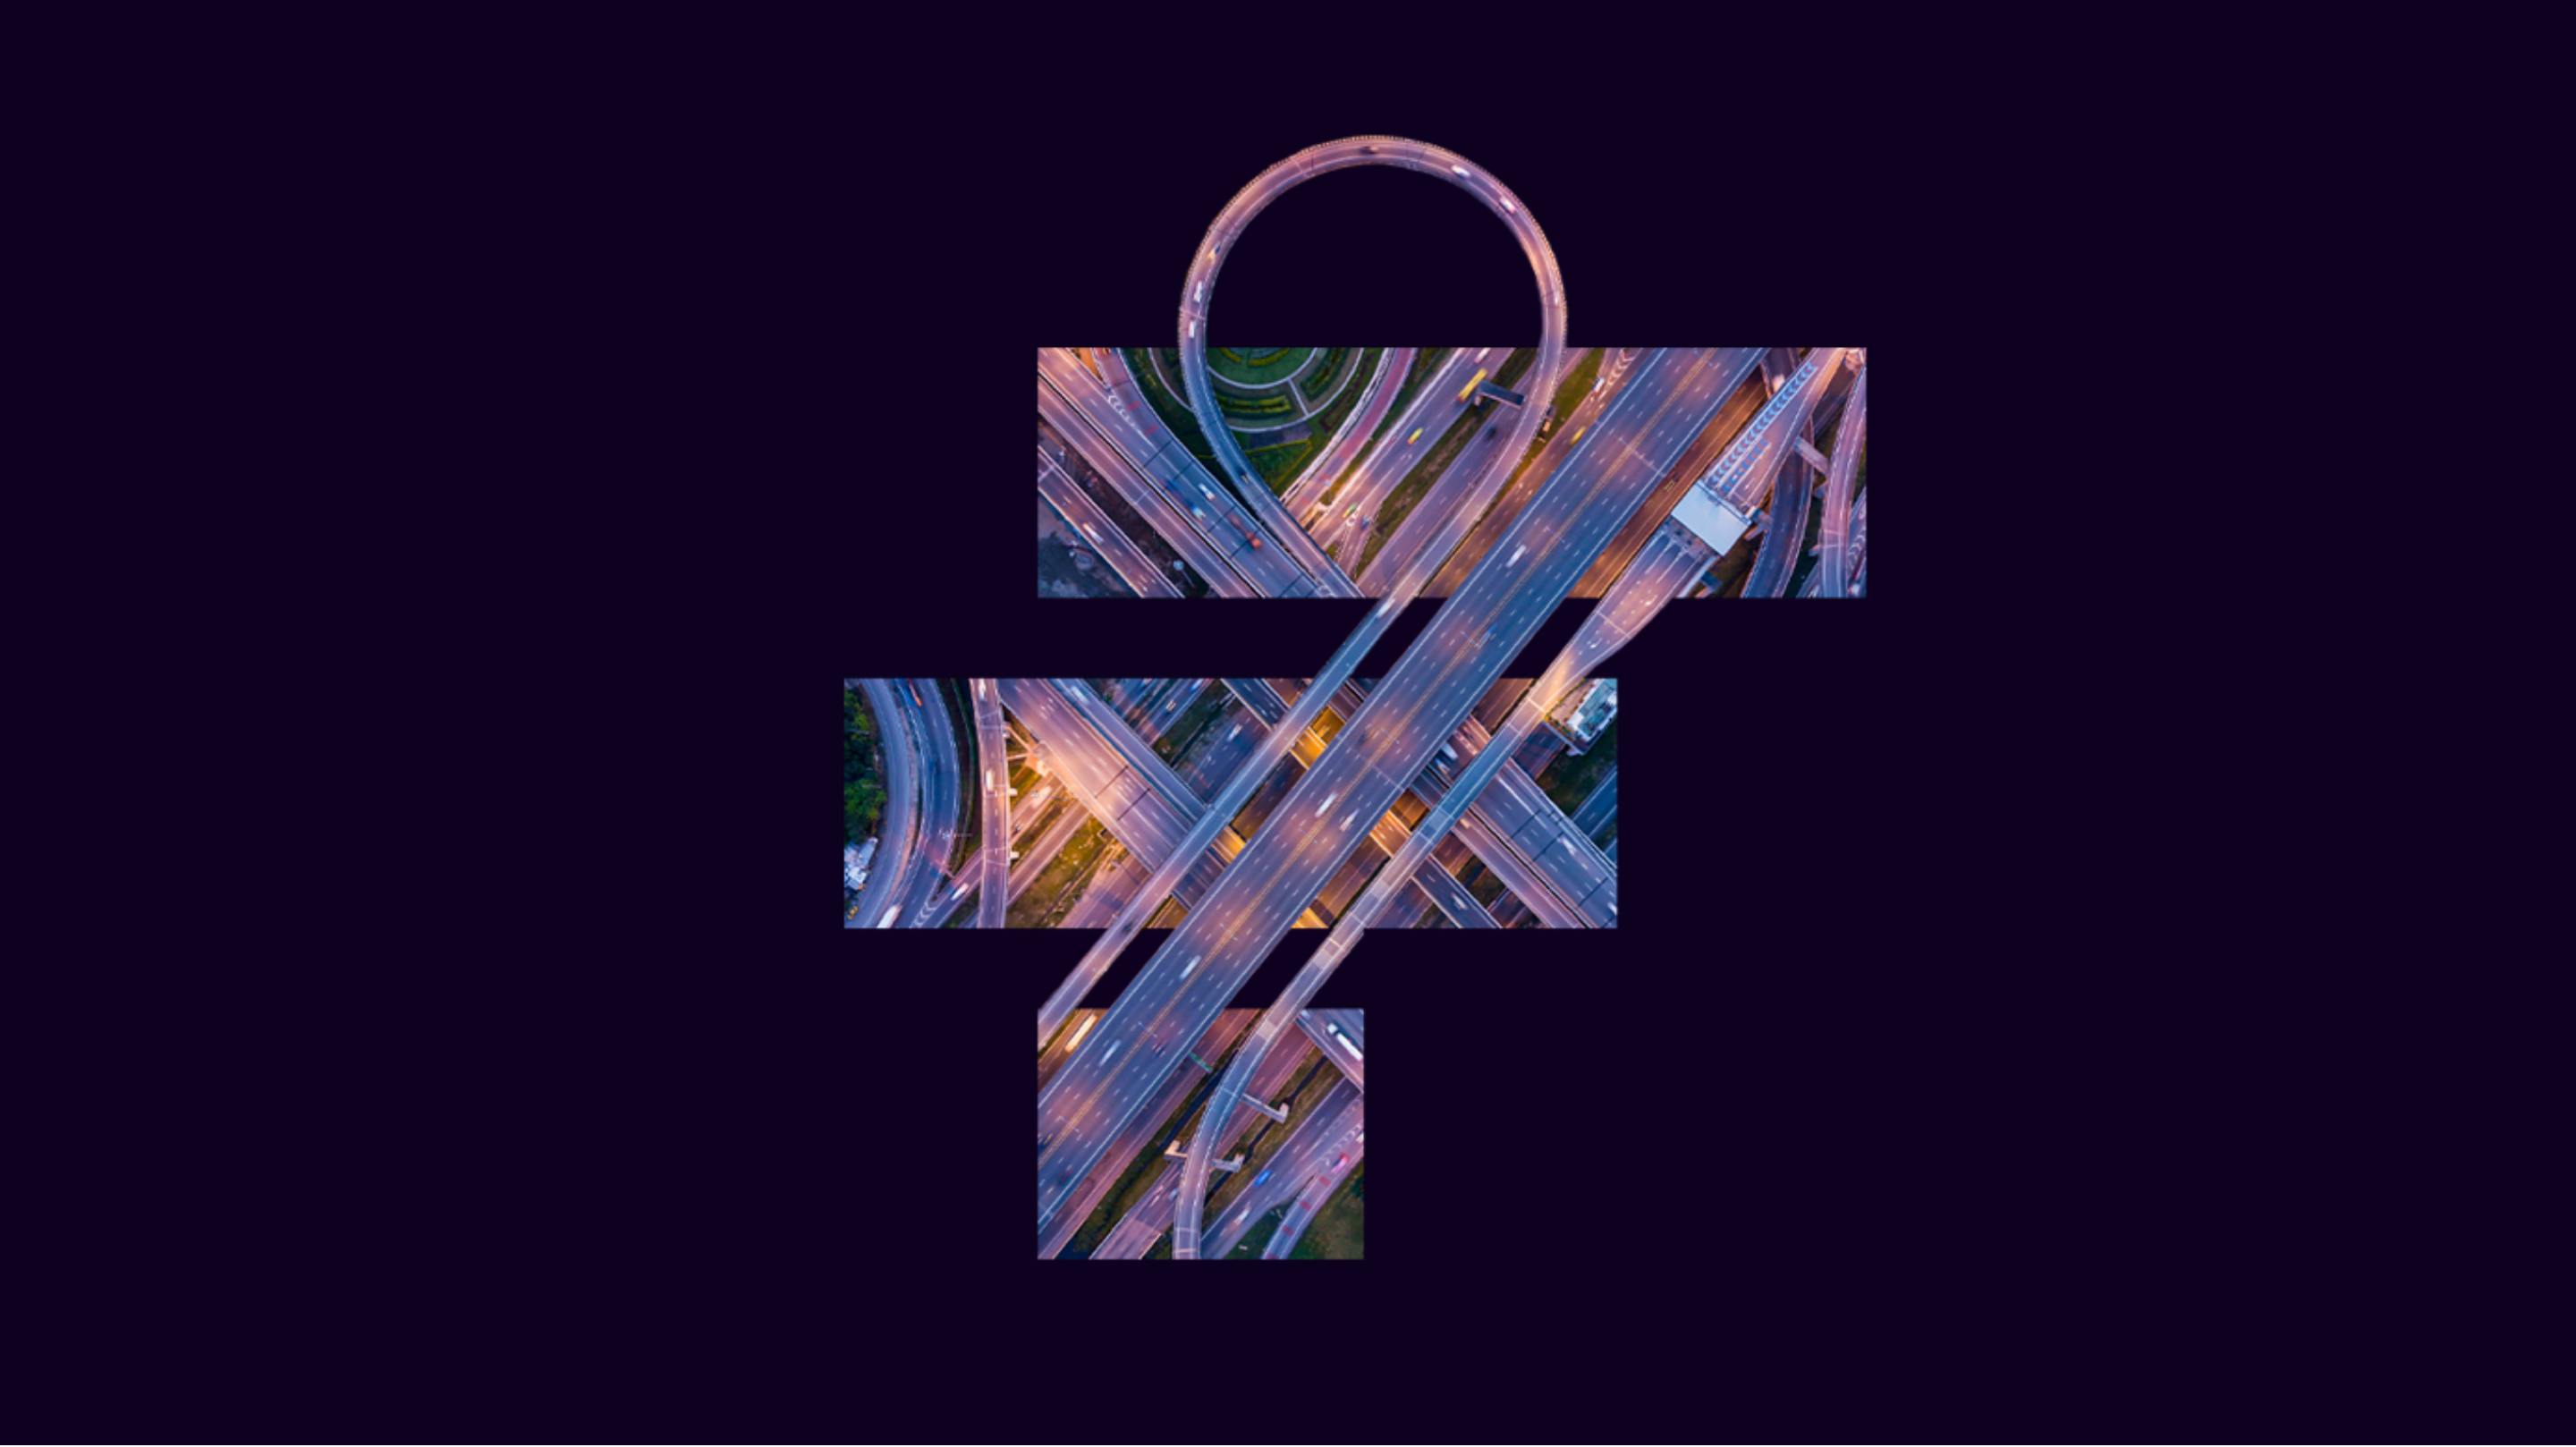 Foresight Factory Logo